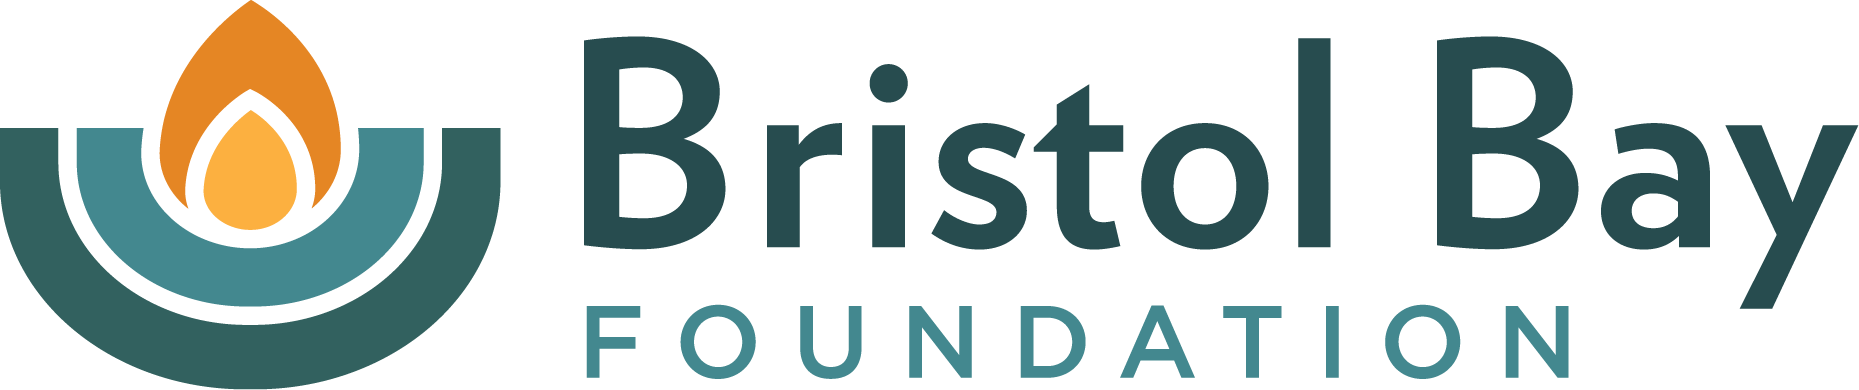 Bristol Bay Foundation logo